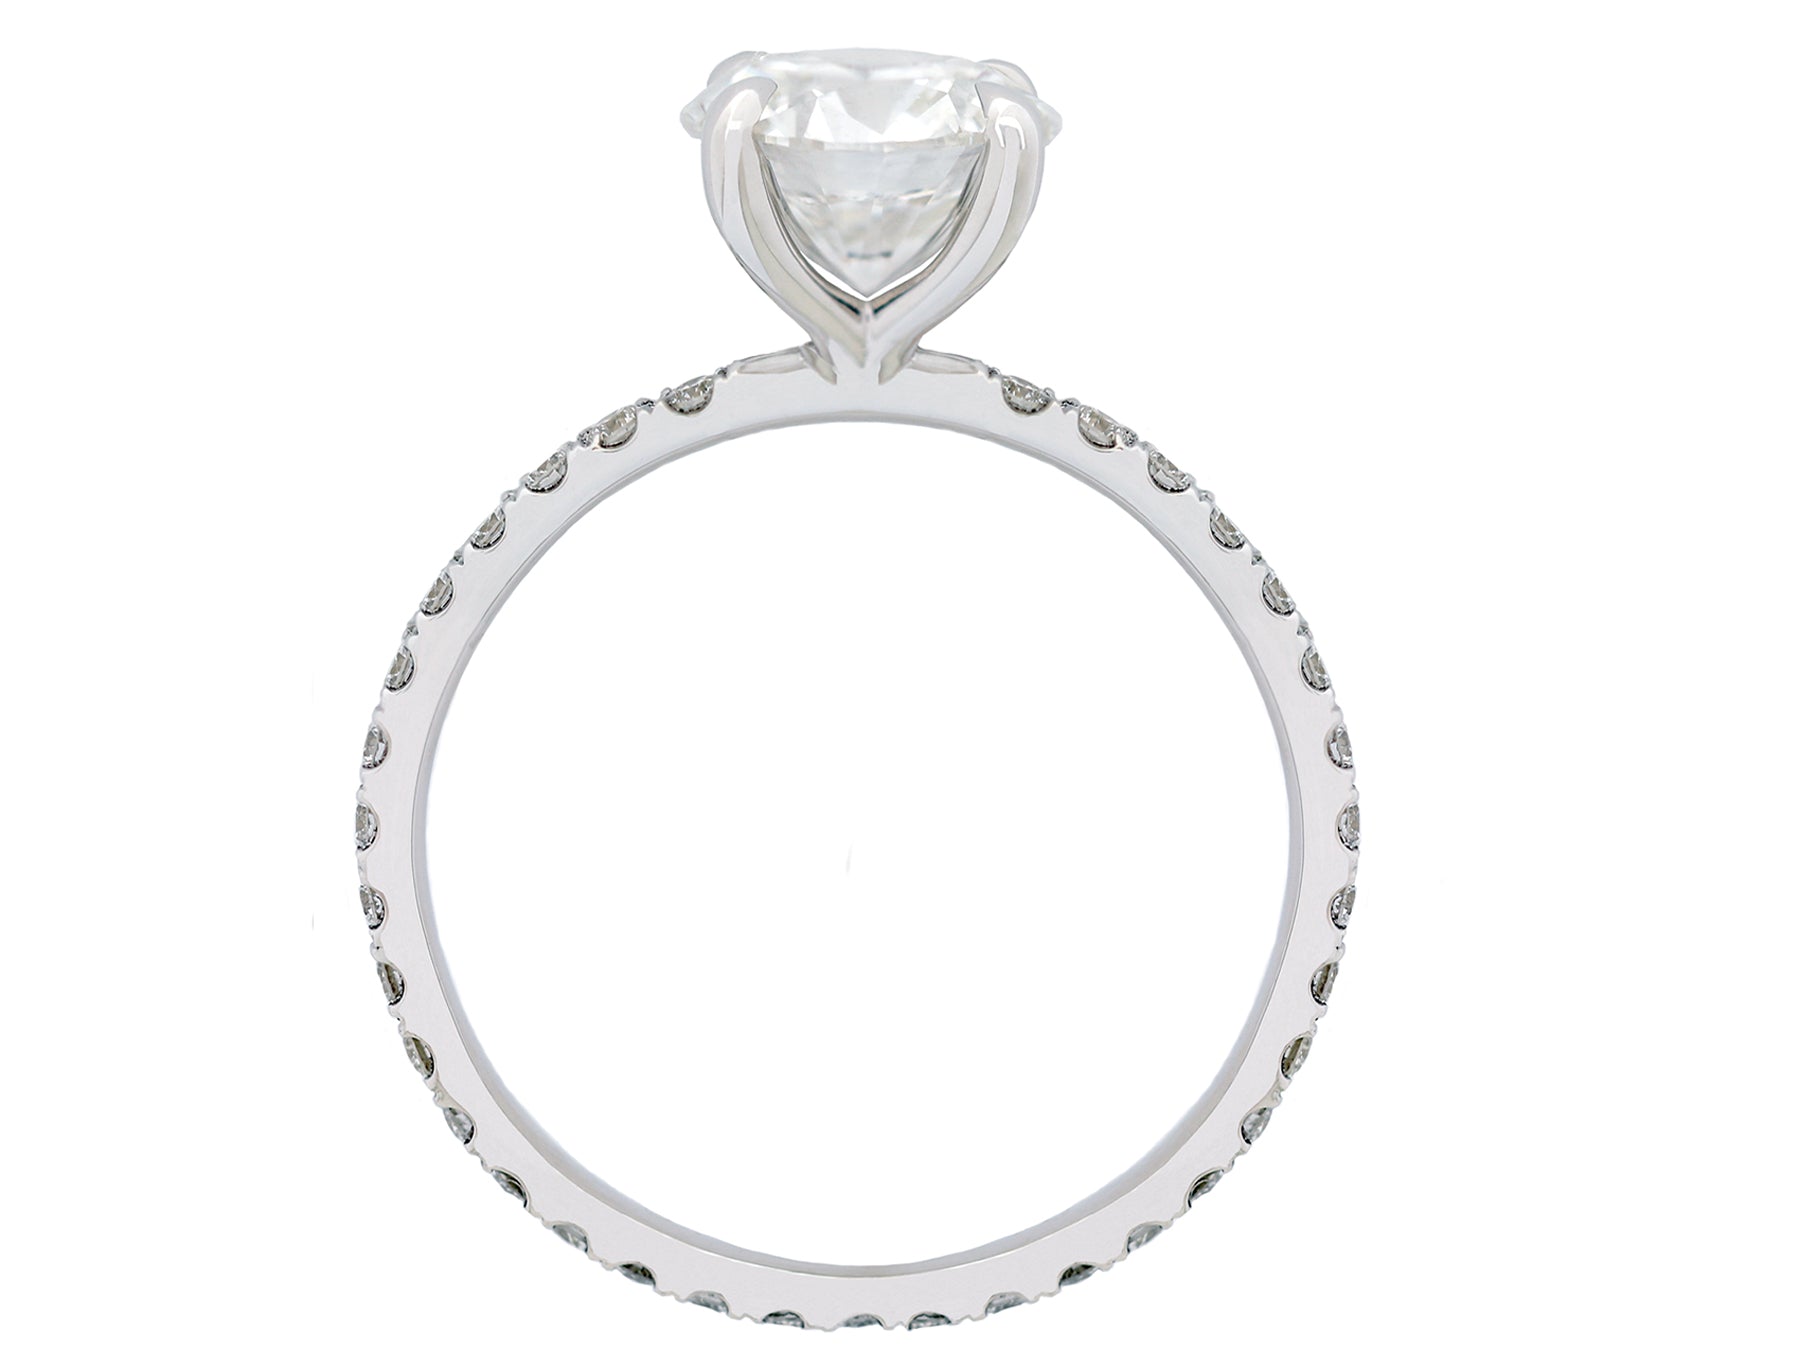 1ct Round Brilliant White Diamond Solitaire Pavé Ring